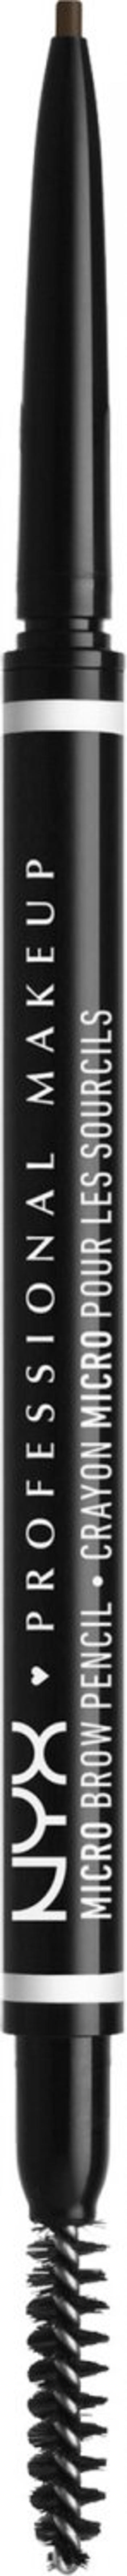 NYX Professional Makeup Micro Brow Pencil - Tužka na obočí - Espresso 0.09 g